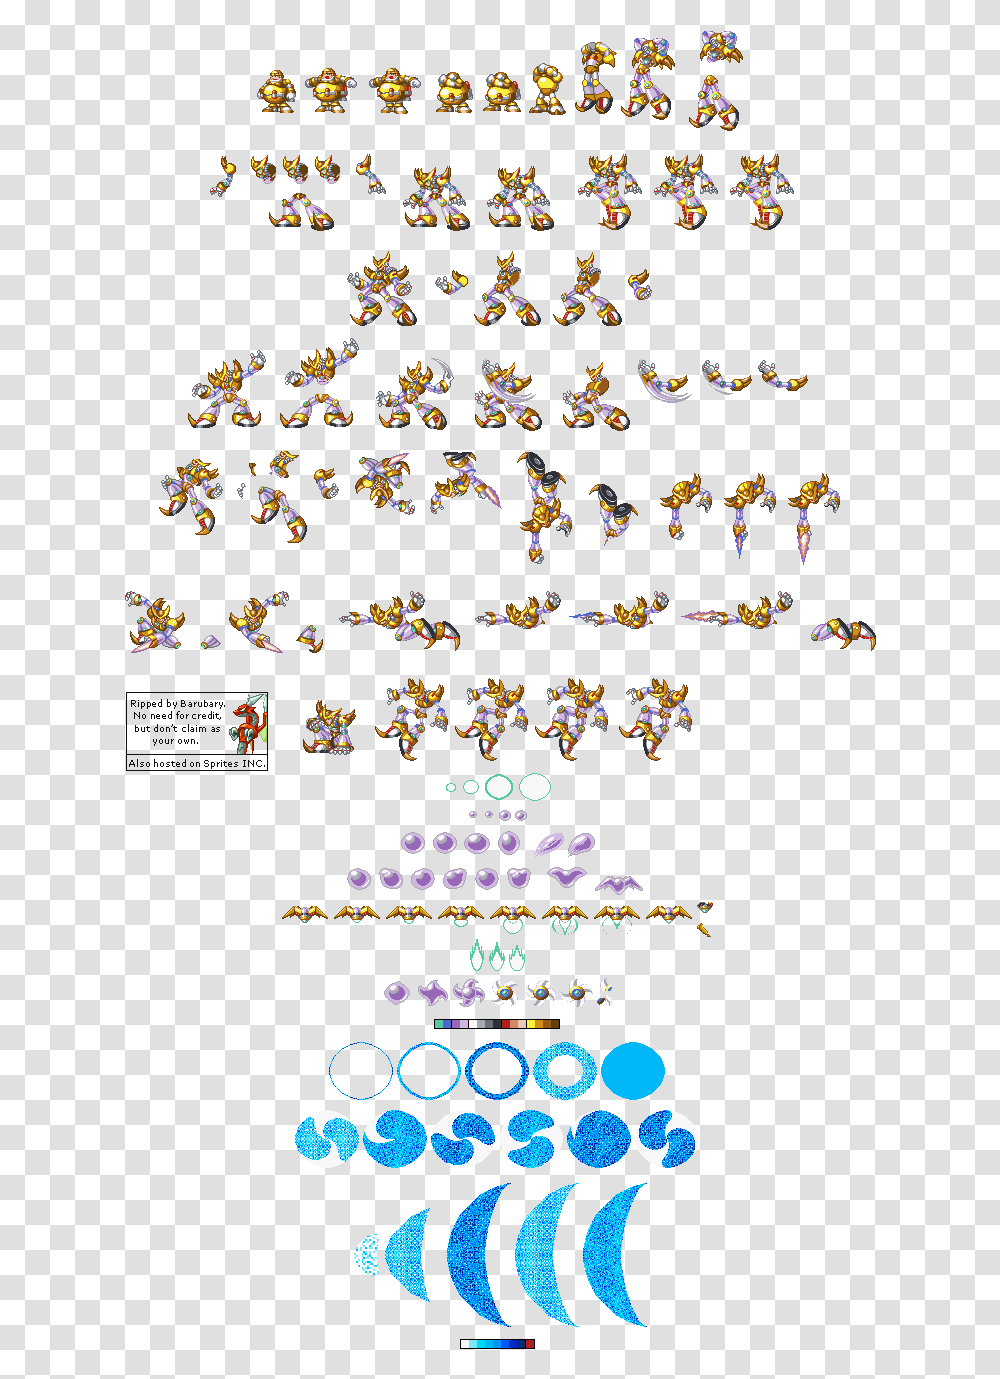 Megaman X4 Sprite Sheet Mega Man X4 Sprites, Super Mario, Pac Man Transparent Png